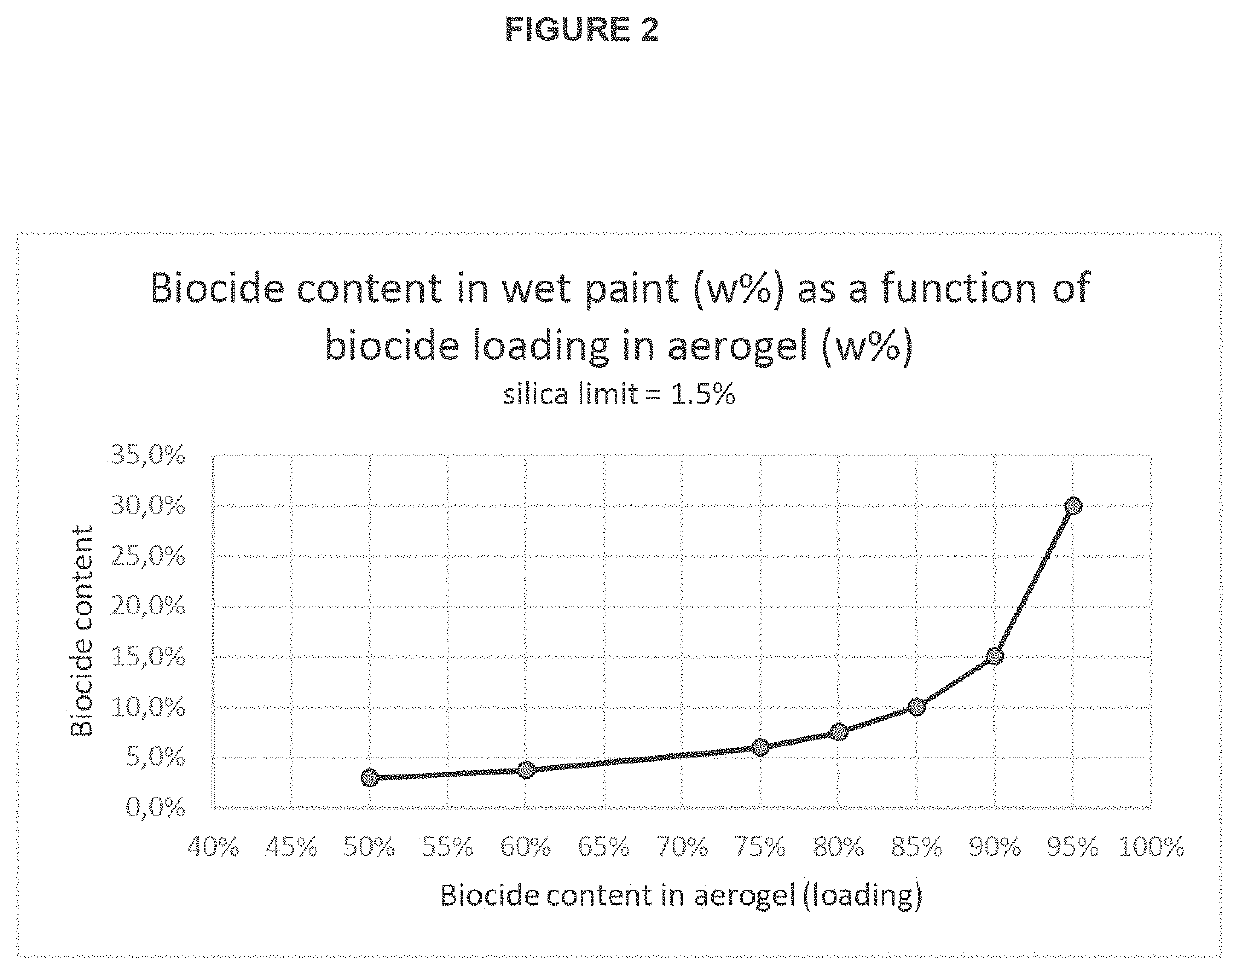 Encapsulated biocides and biorepellents